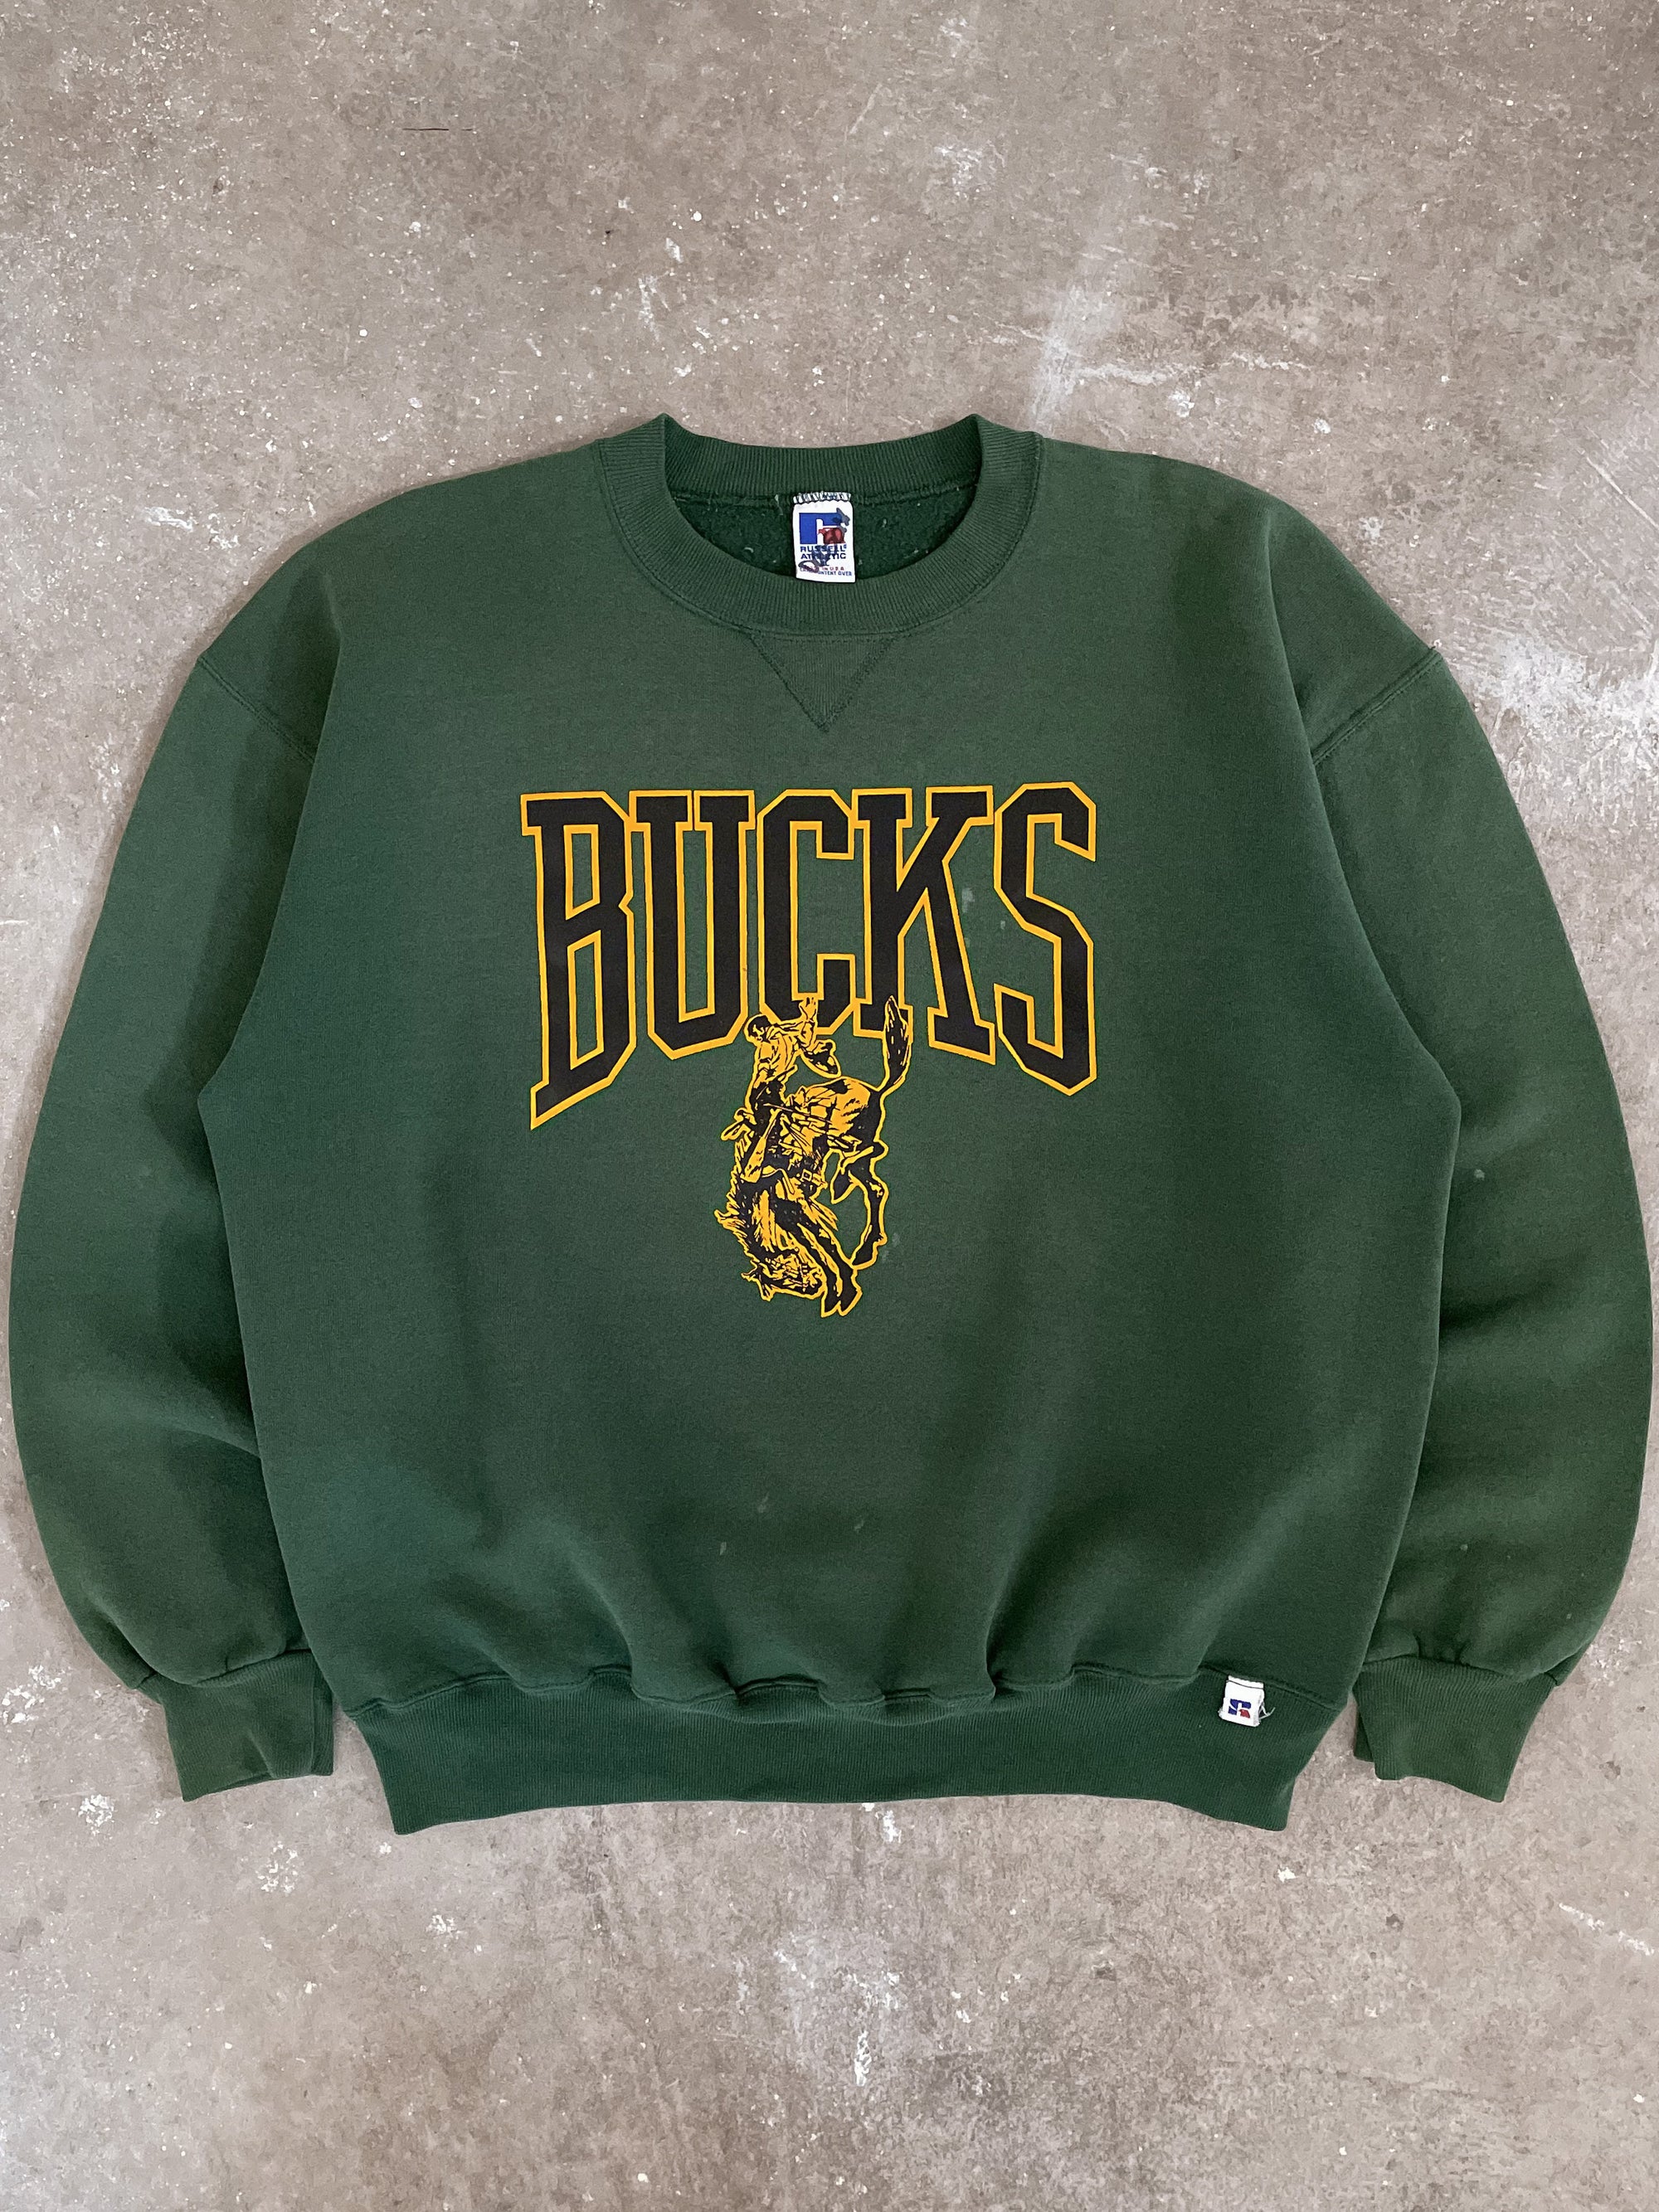 1990s Russell “Bucks” Sweatshirt (XL)